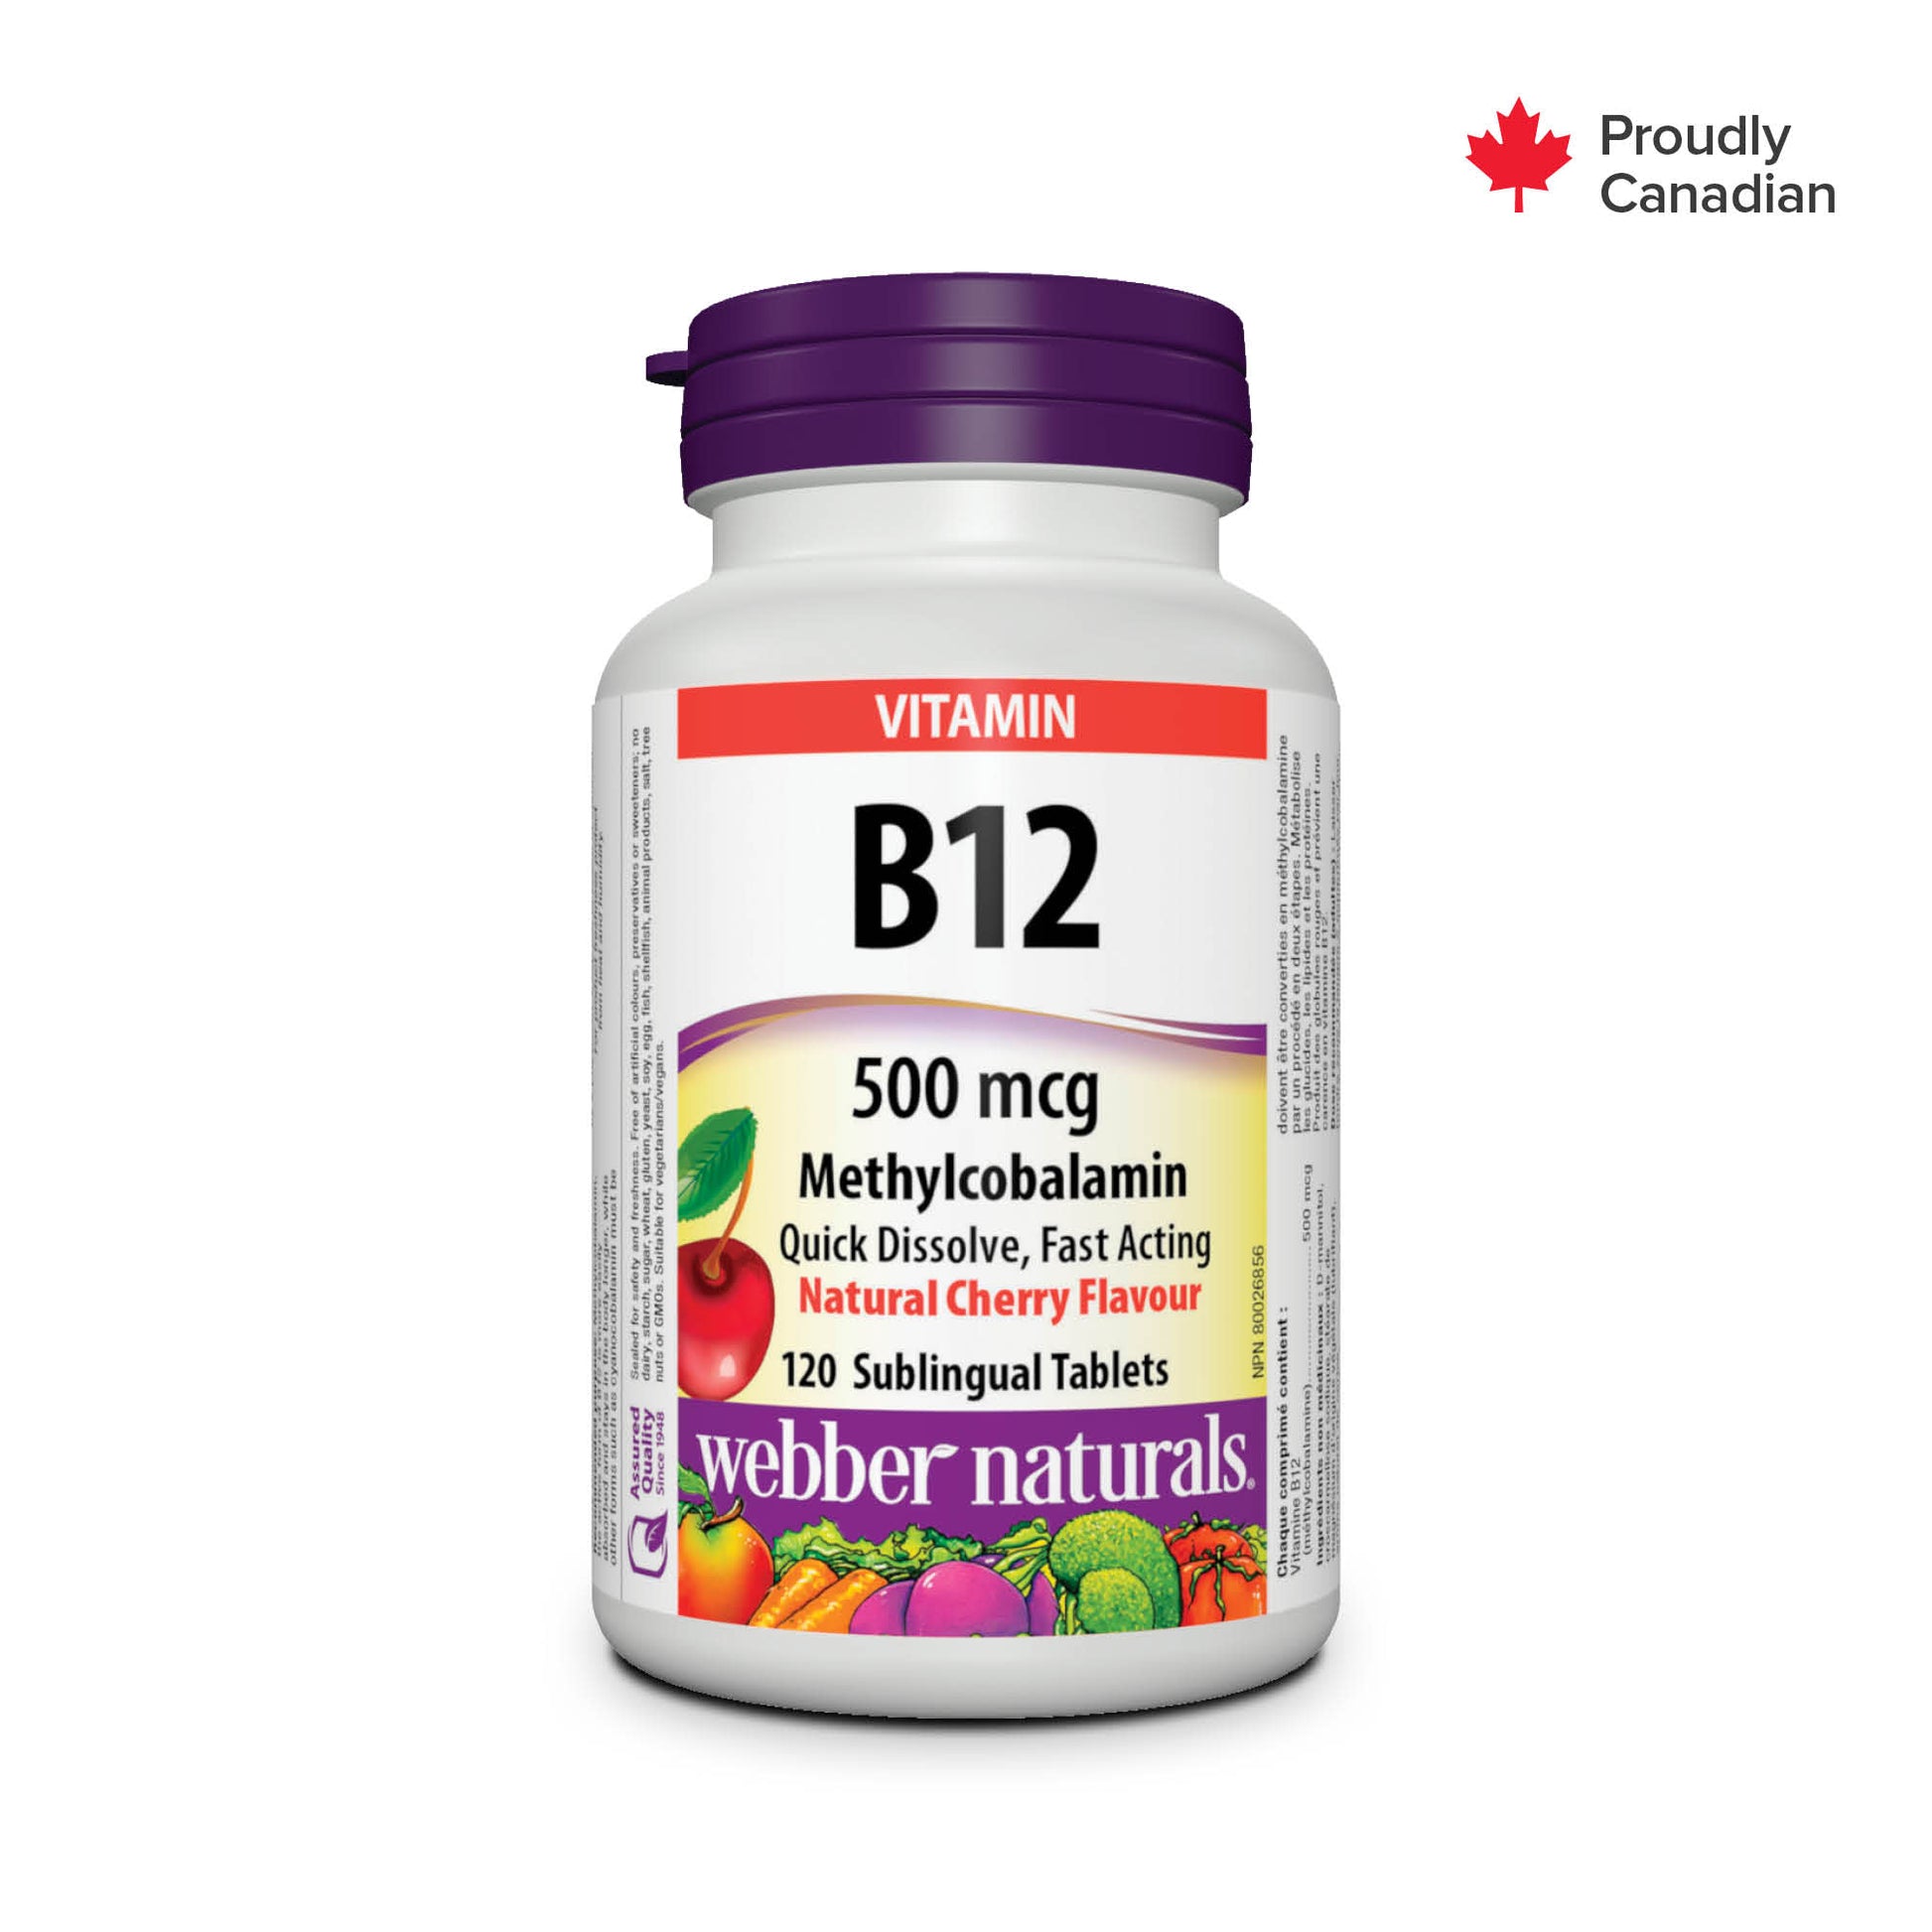 Vitamine B12 500 mcg Arôme naturel de cerise for Webber Naturals|v|hi-res|WN3170